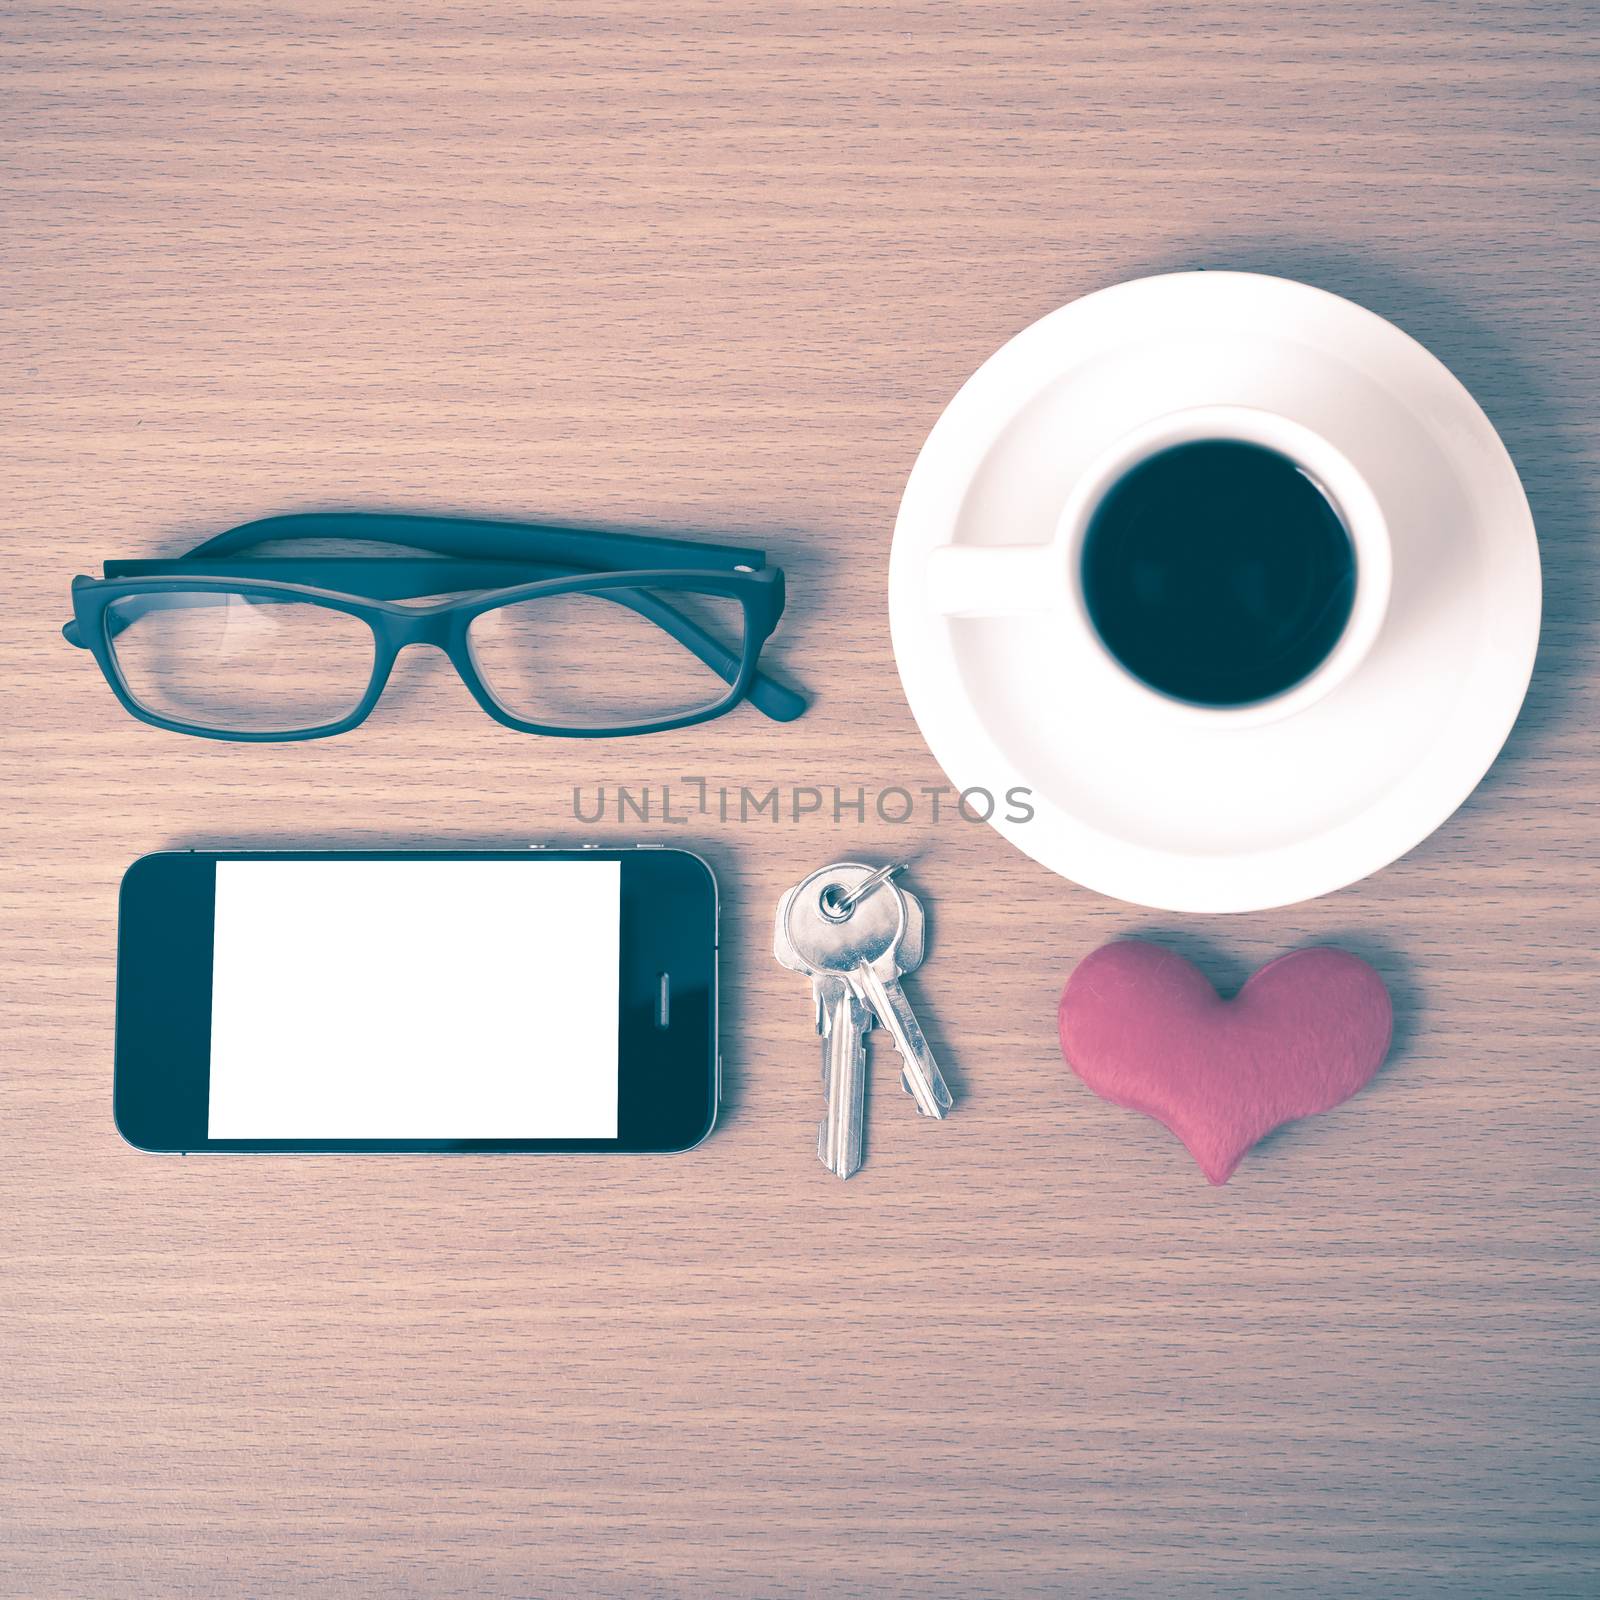 coffee,phone,eyeglasses,key and heart by ammza12